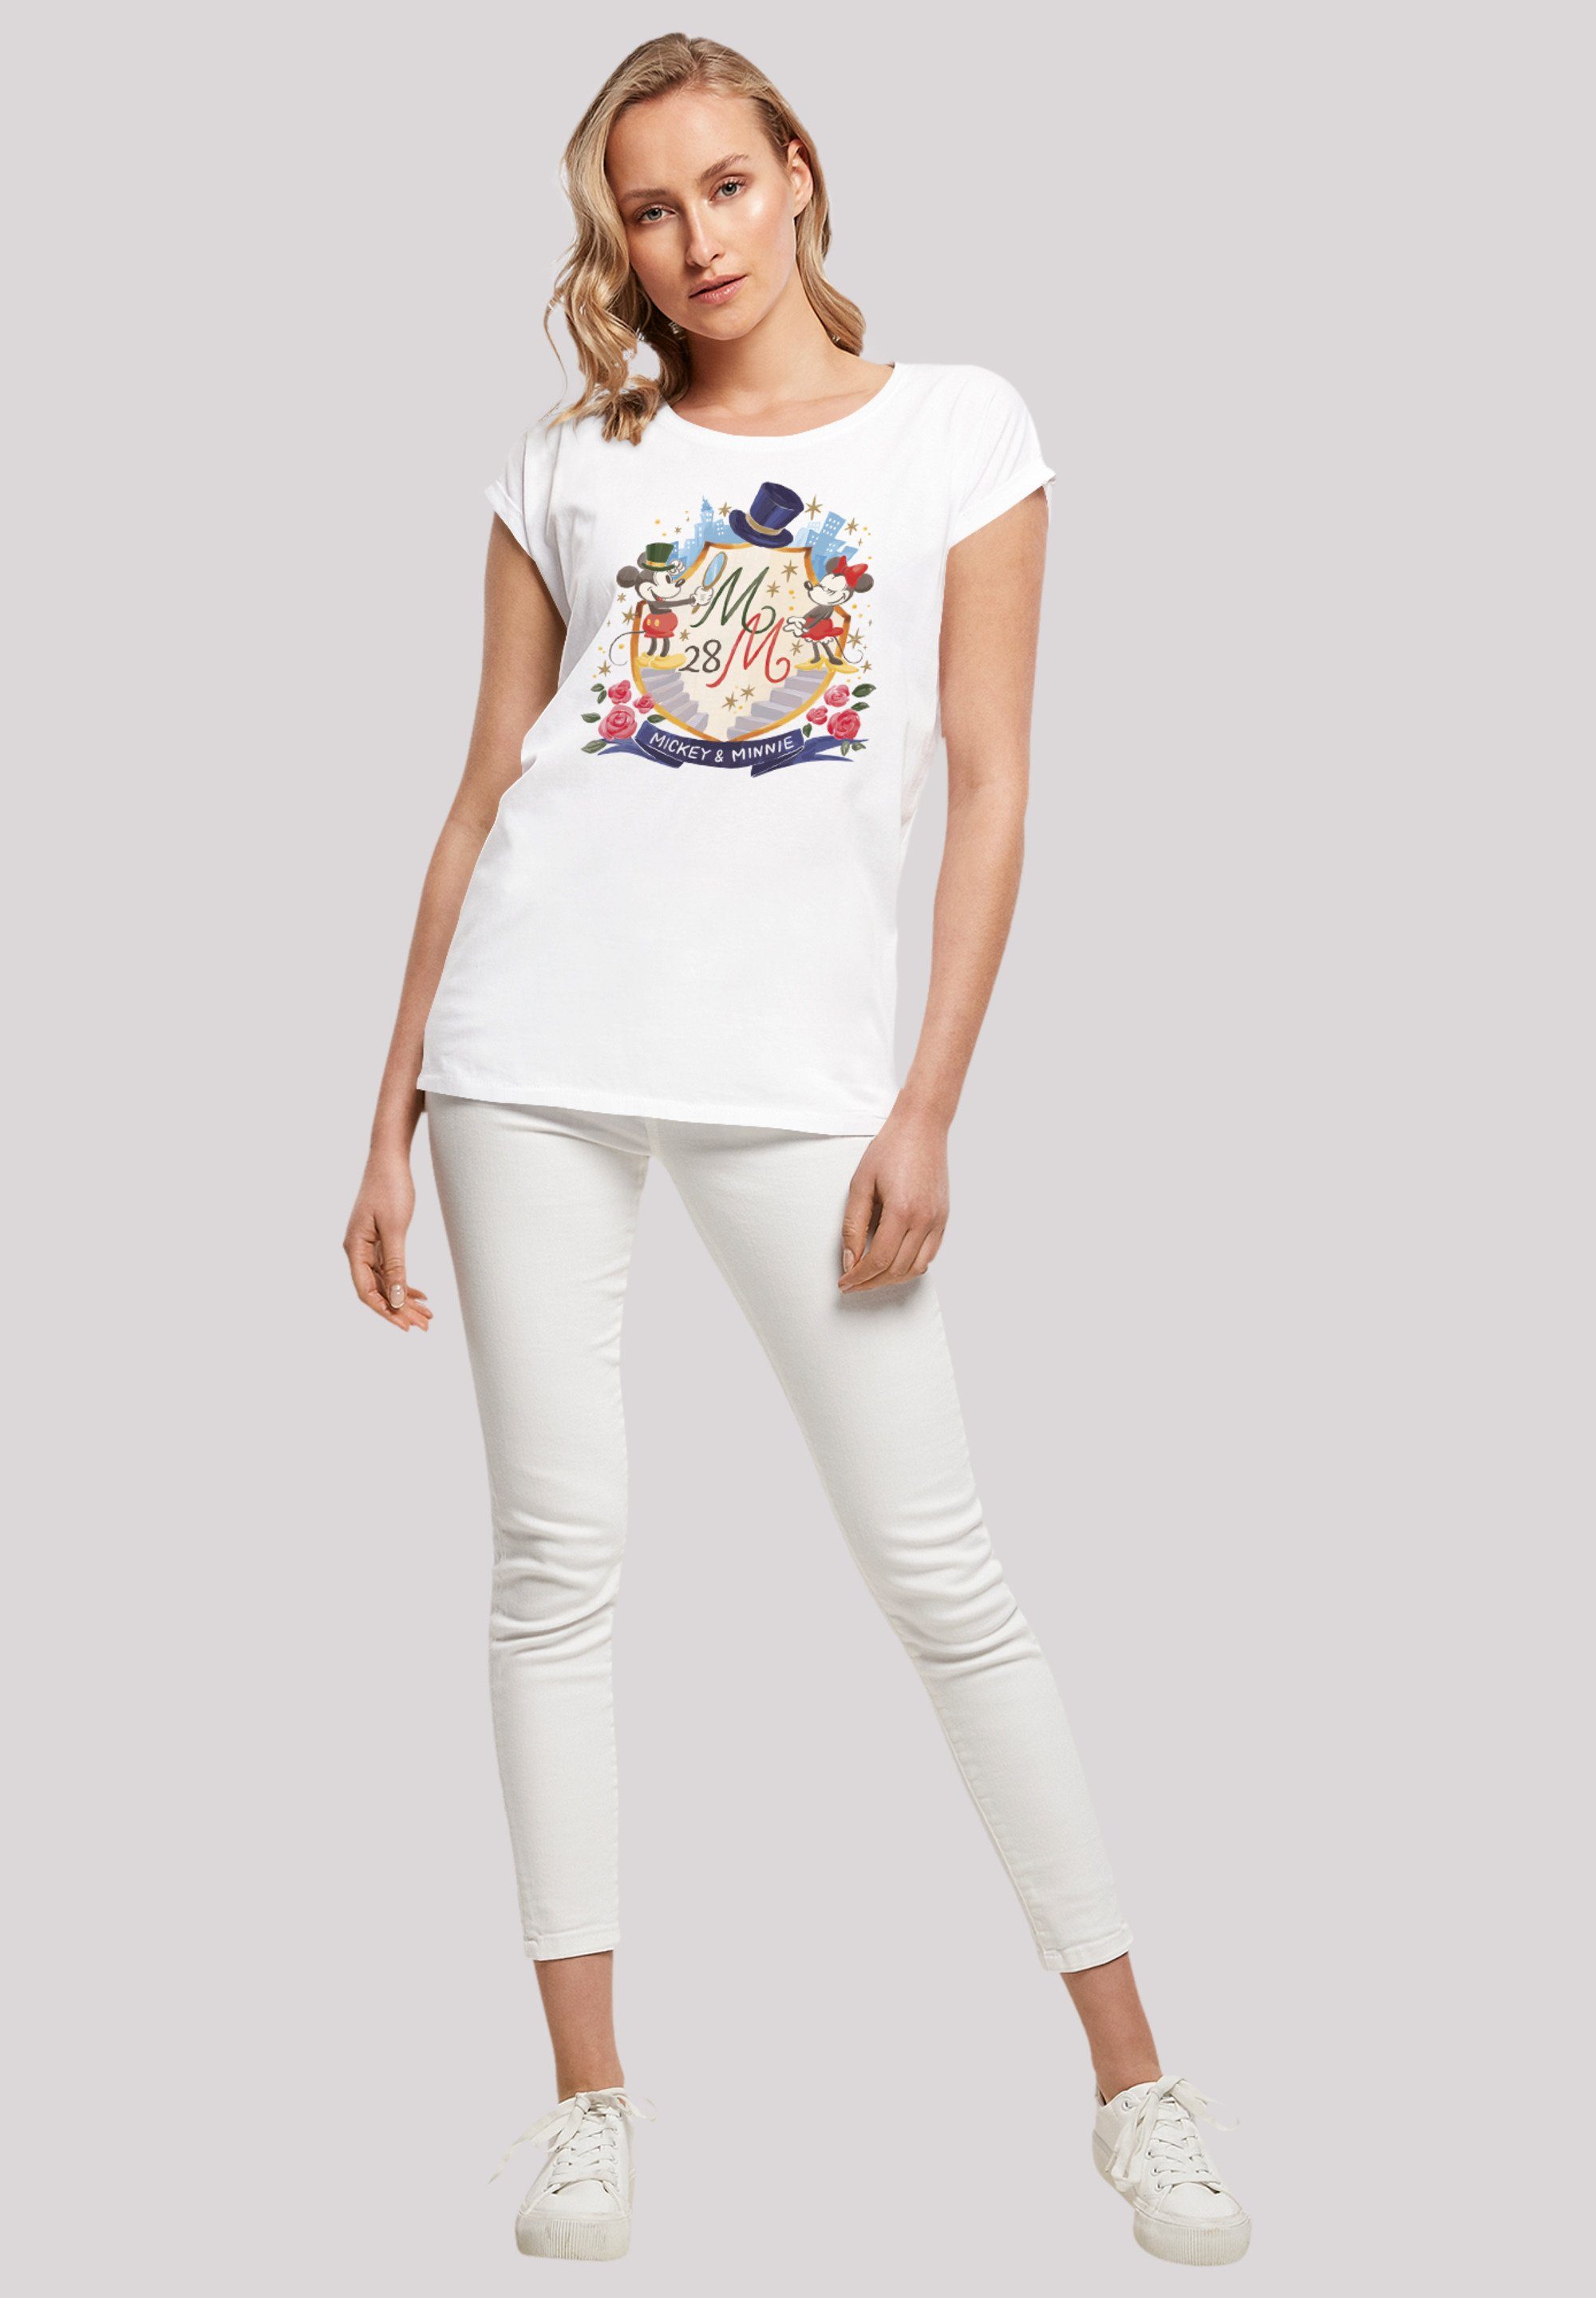 & Qualität 28 Premium Micky Minnie Disney Maus T-Shirt F4NT4STIC